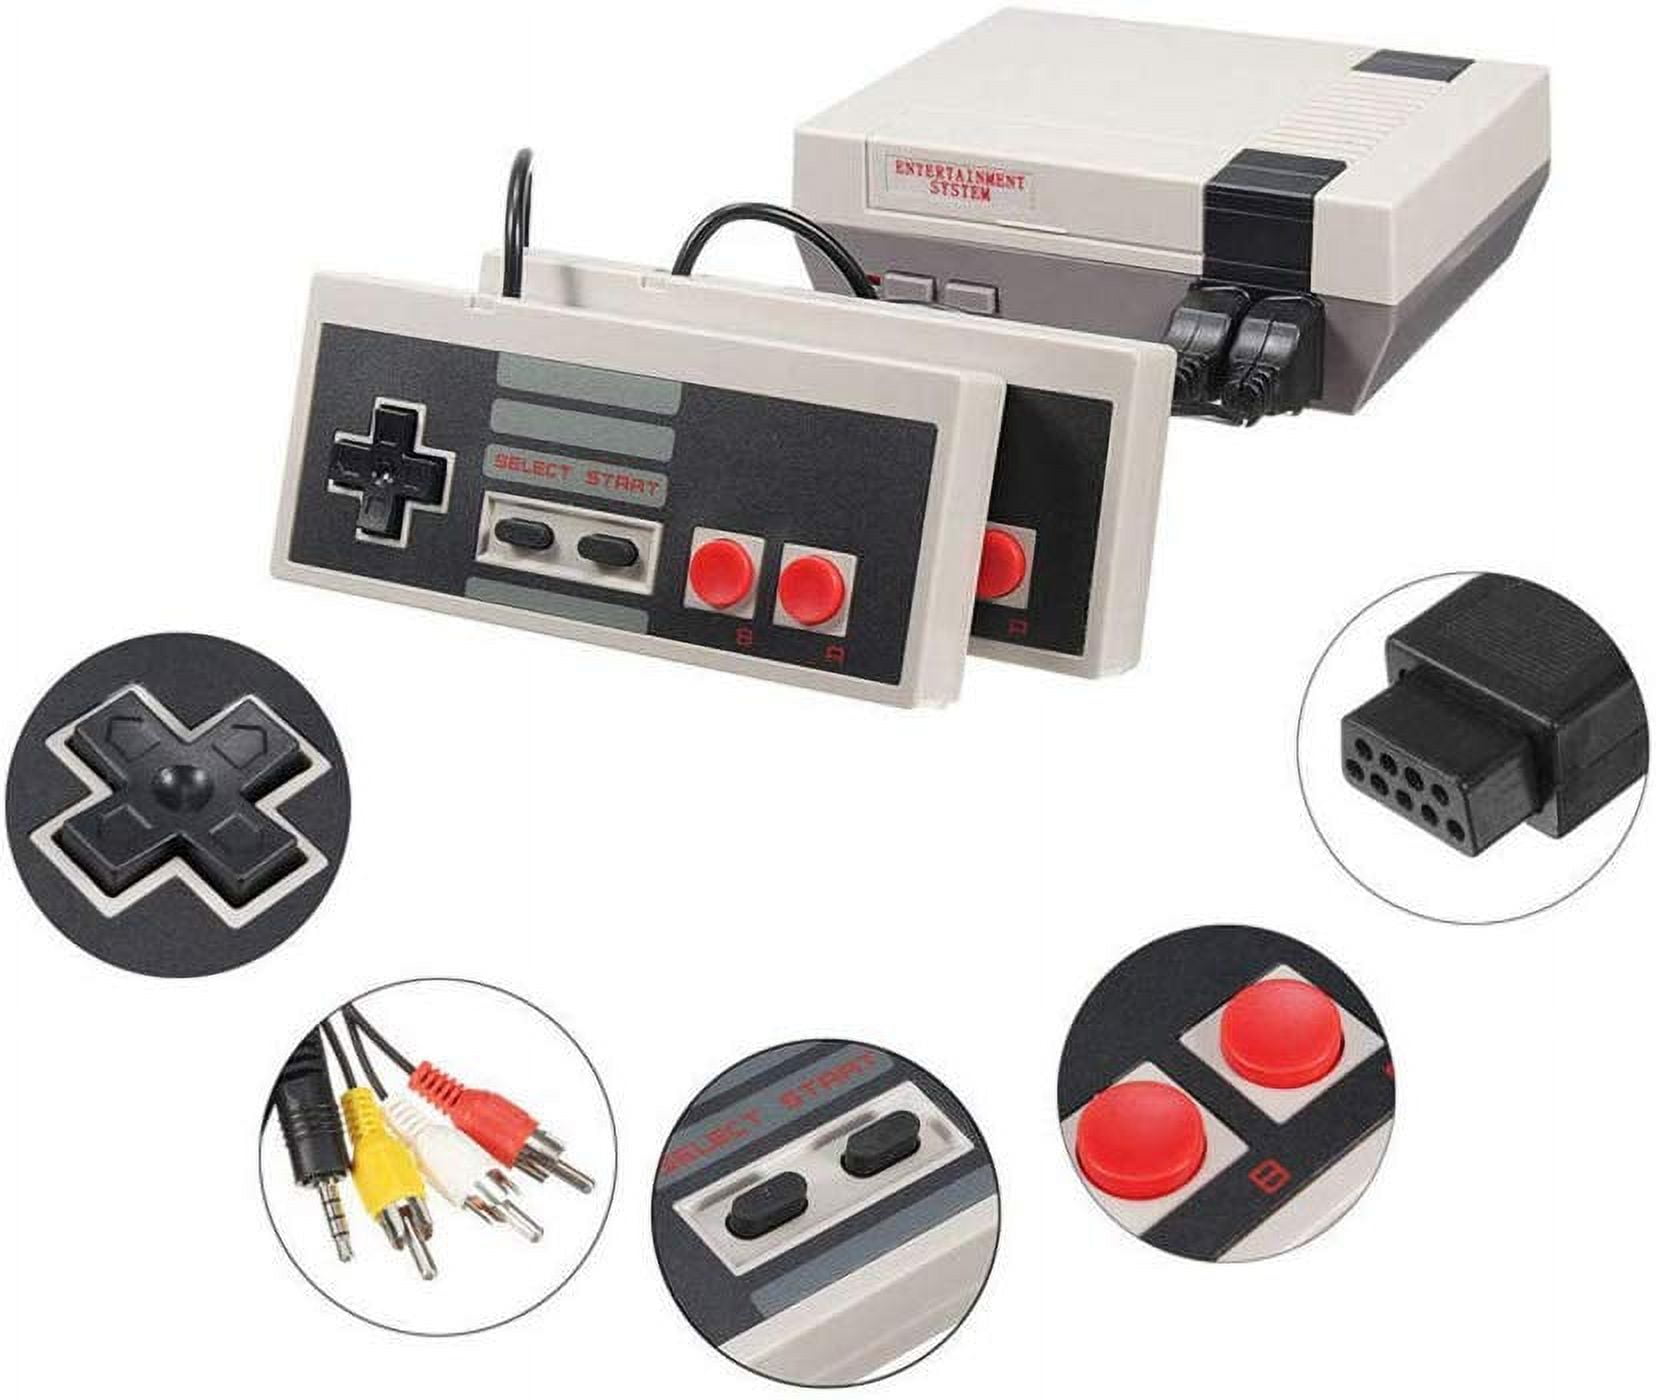 ORIGINAL Nintendo Entertainment System Video Game Bundle Set Kit NES  Console OG